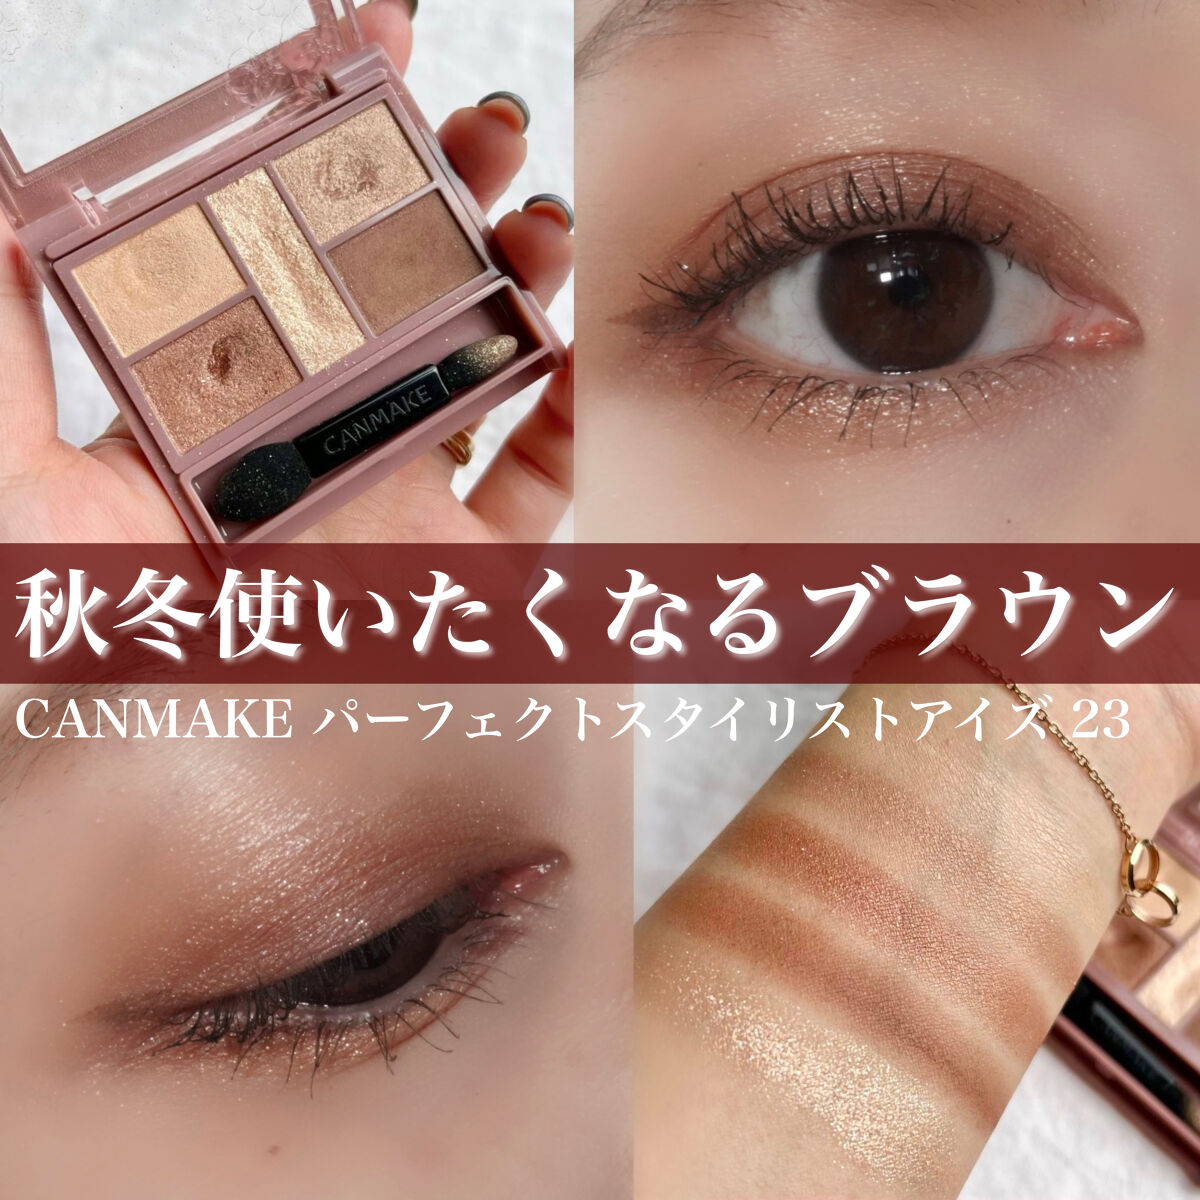 CANMAKE Perfect Stylist Eyes (23 杏仁可麗露) キャンメイク パーフェクトスタイリストアイズ